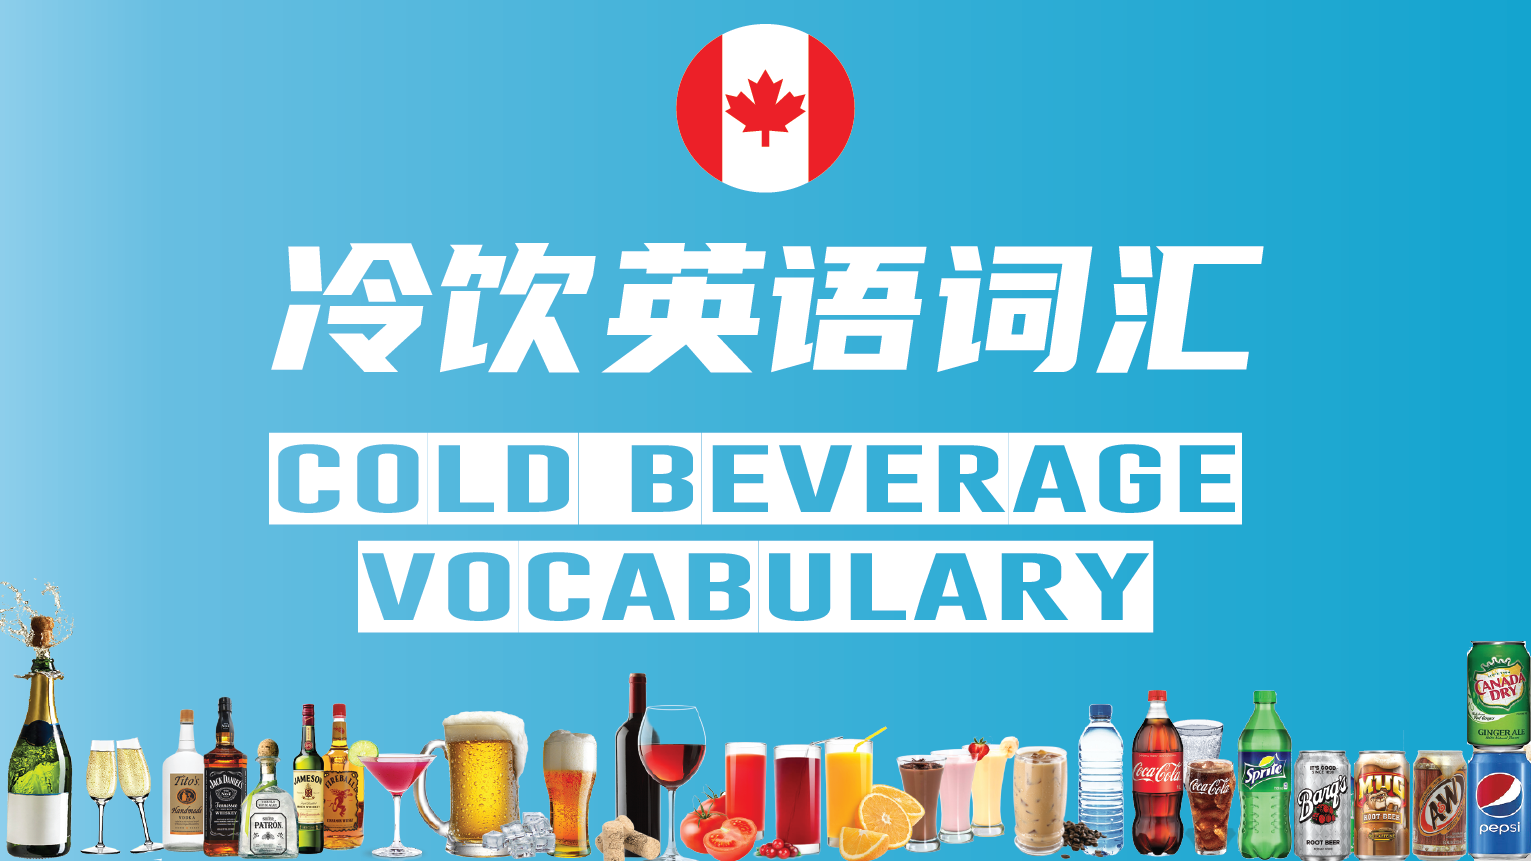 Cold Beverage Vocabulary